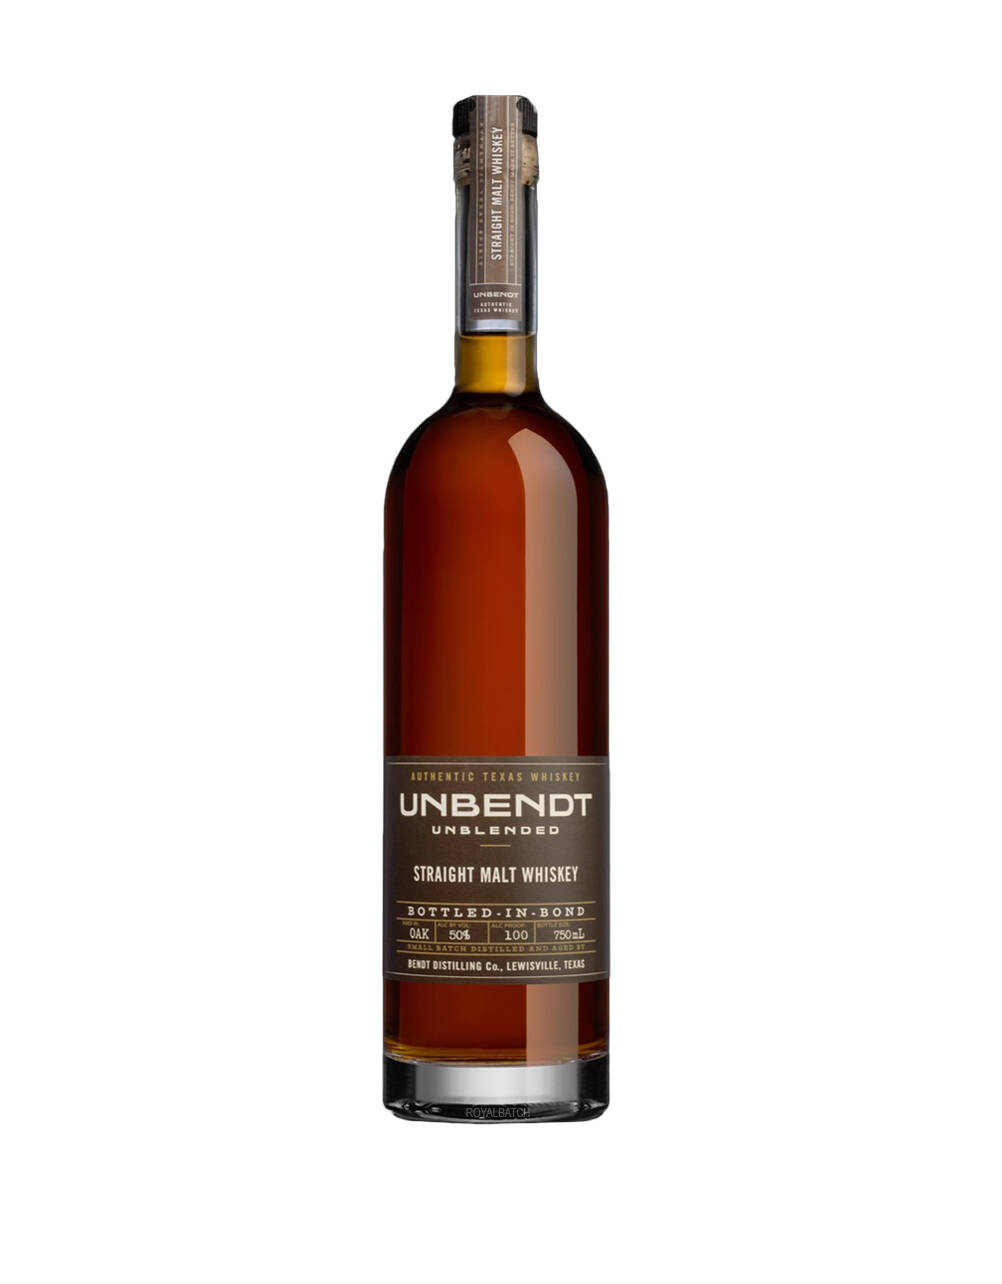 Unbendt Unblended Straight Malt Whiskey